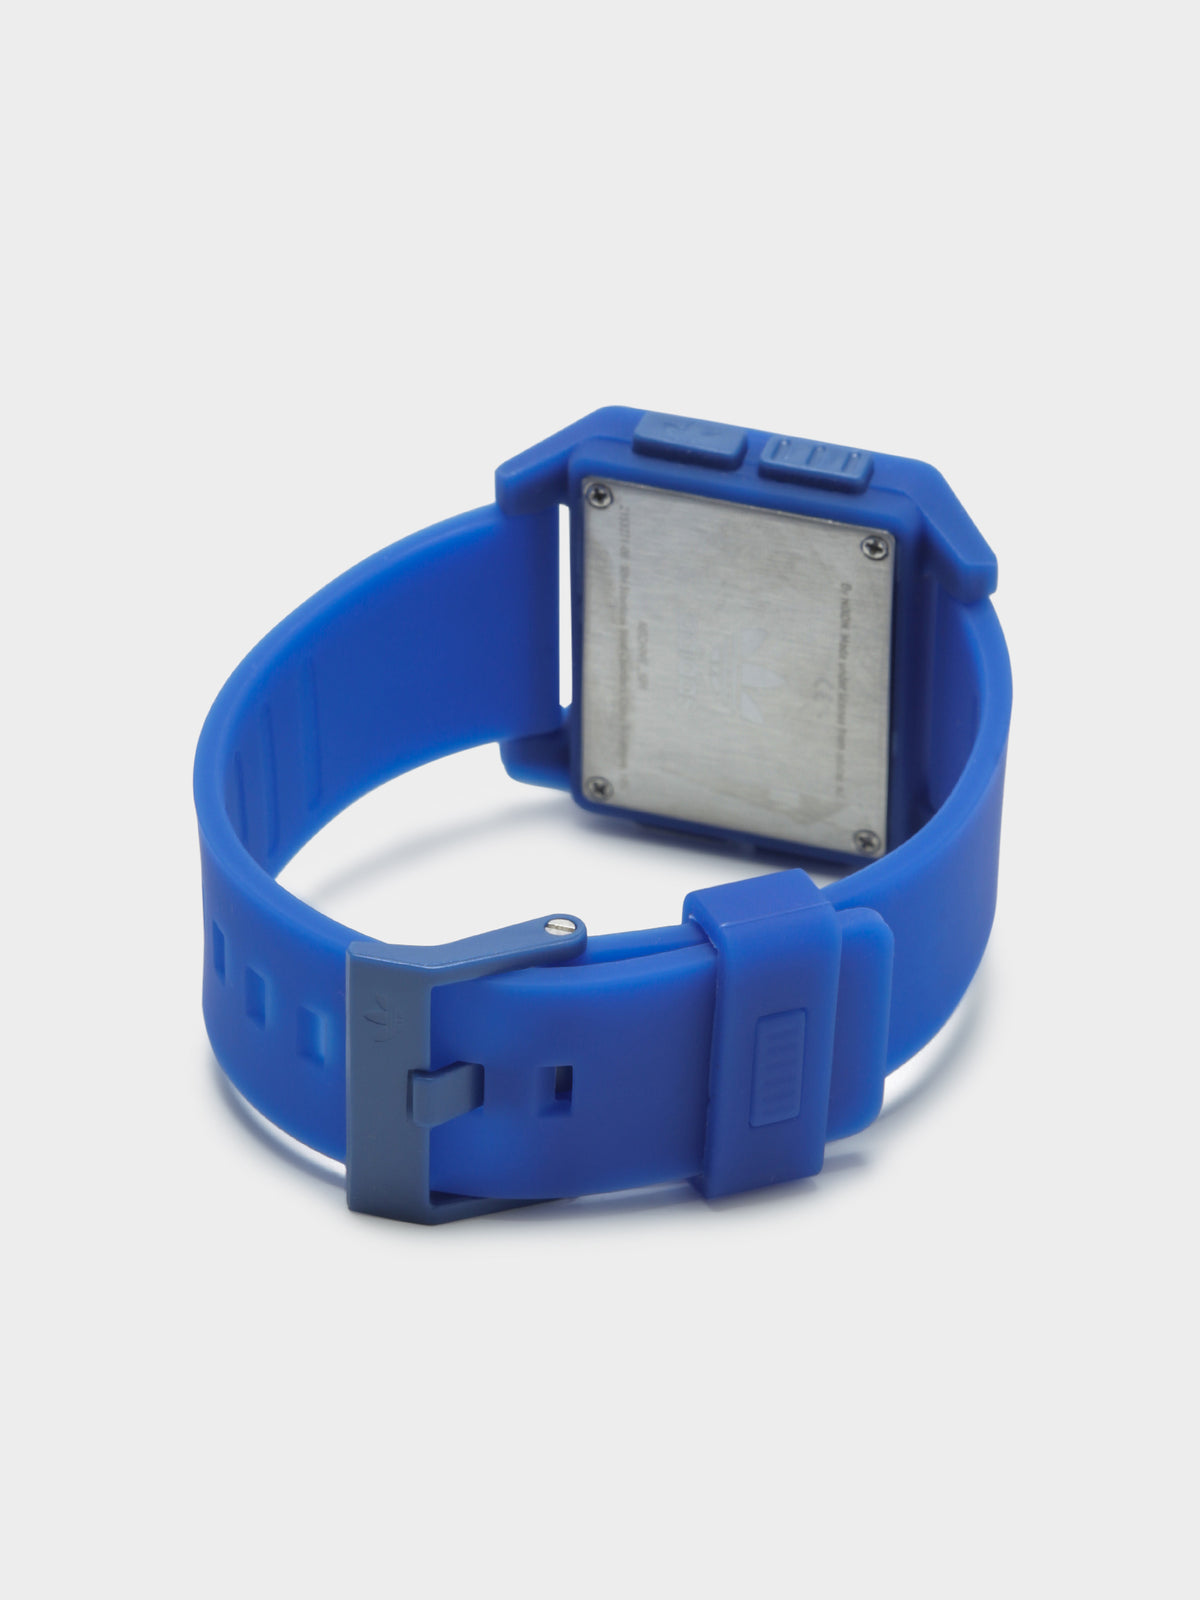 Archive_SP1 Digital Watch in Royal Blue